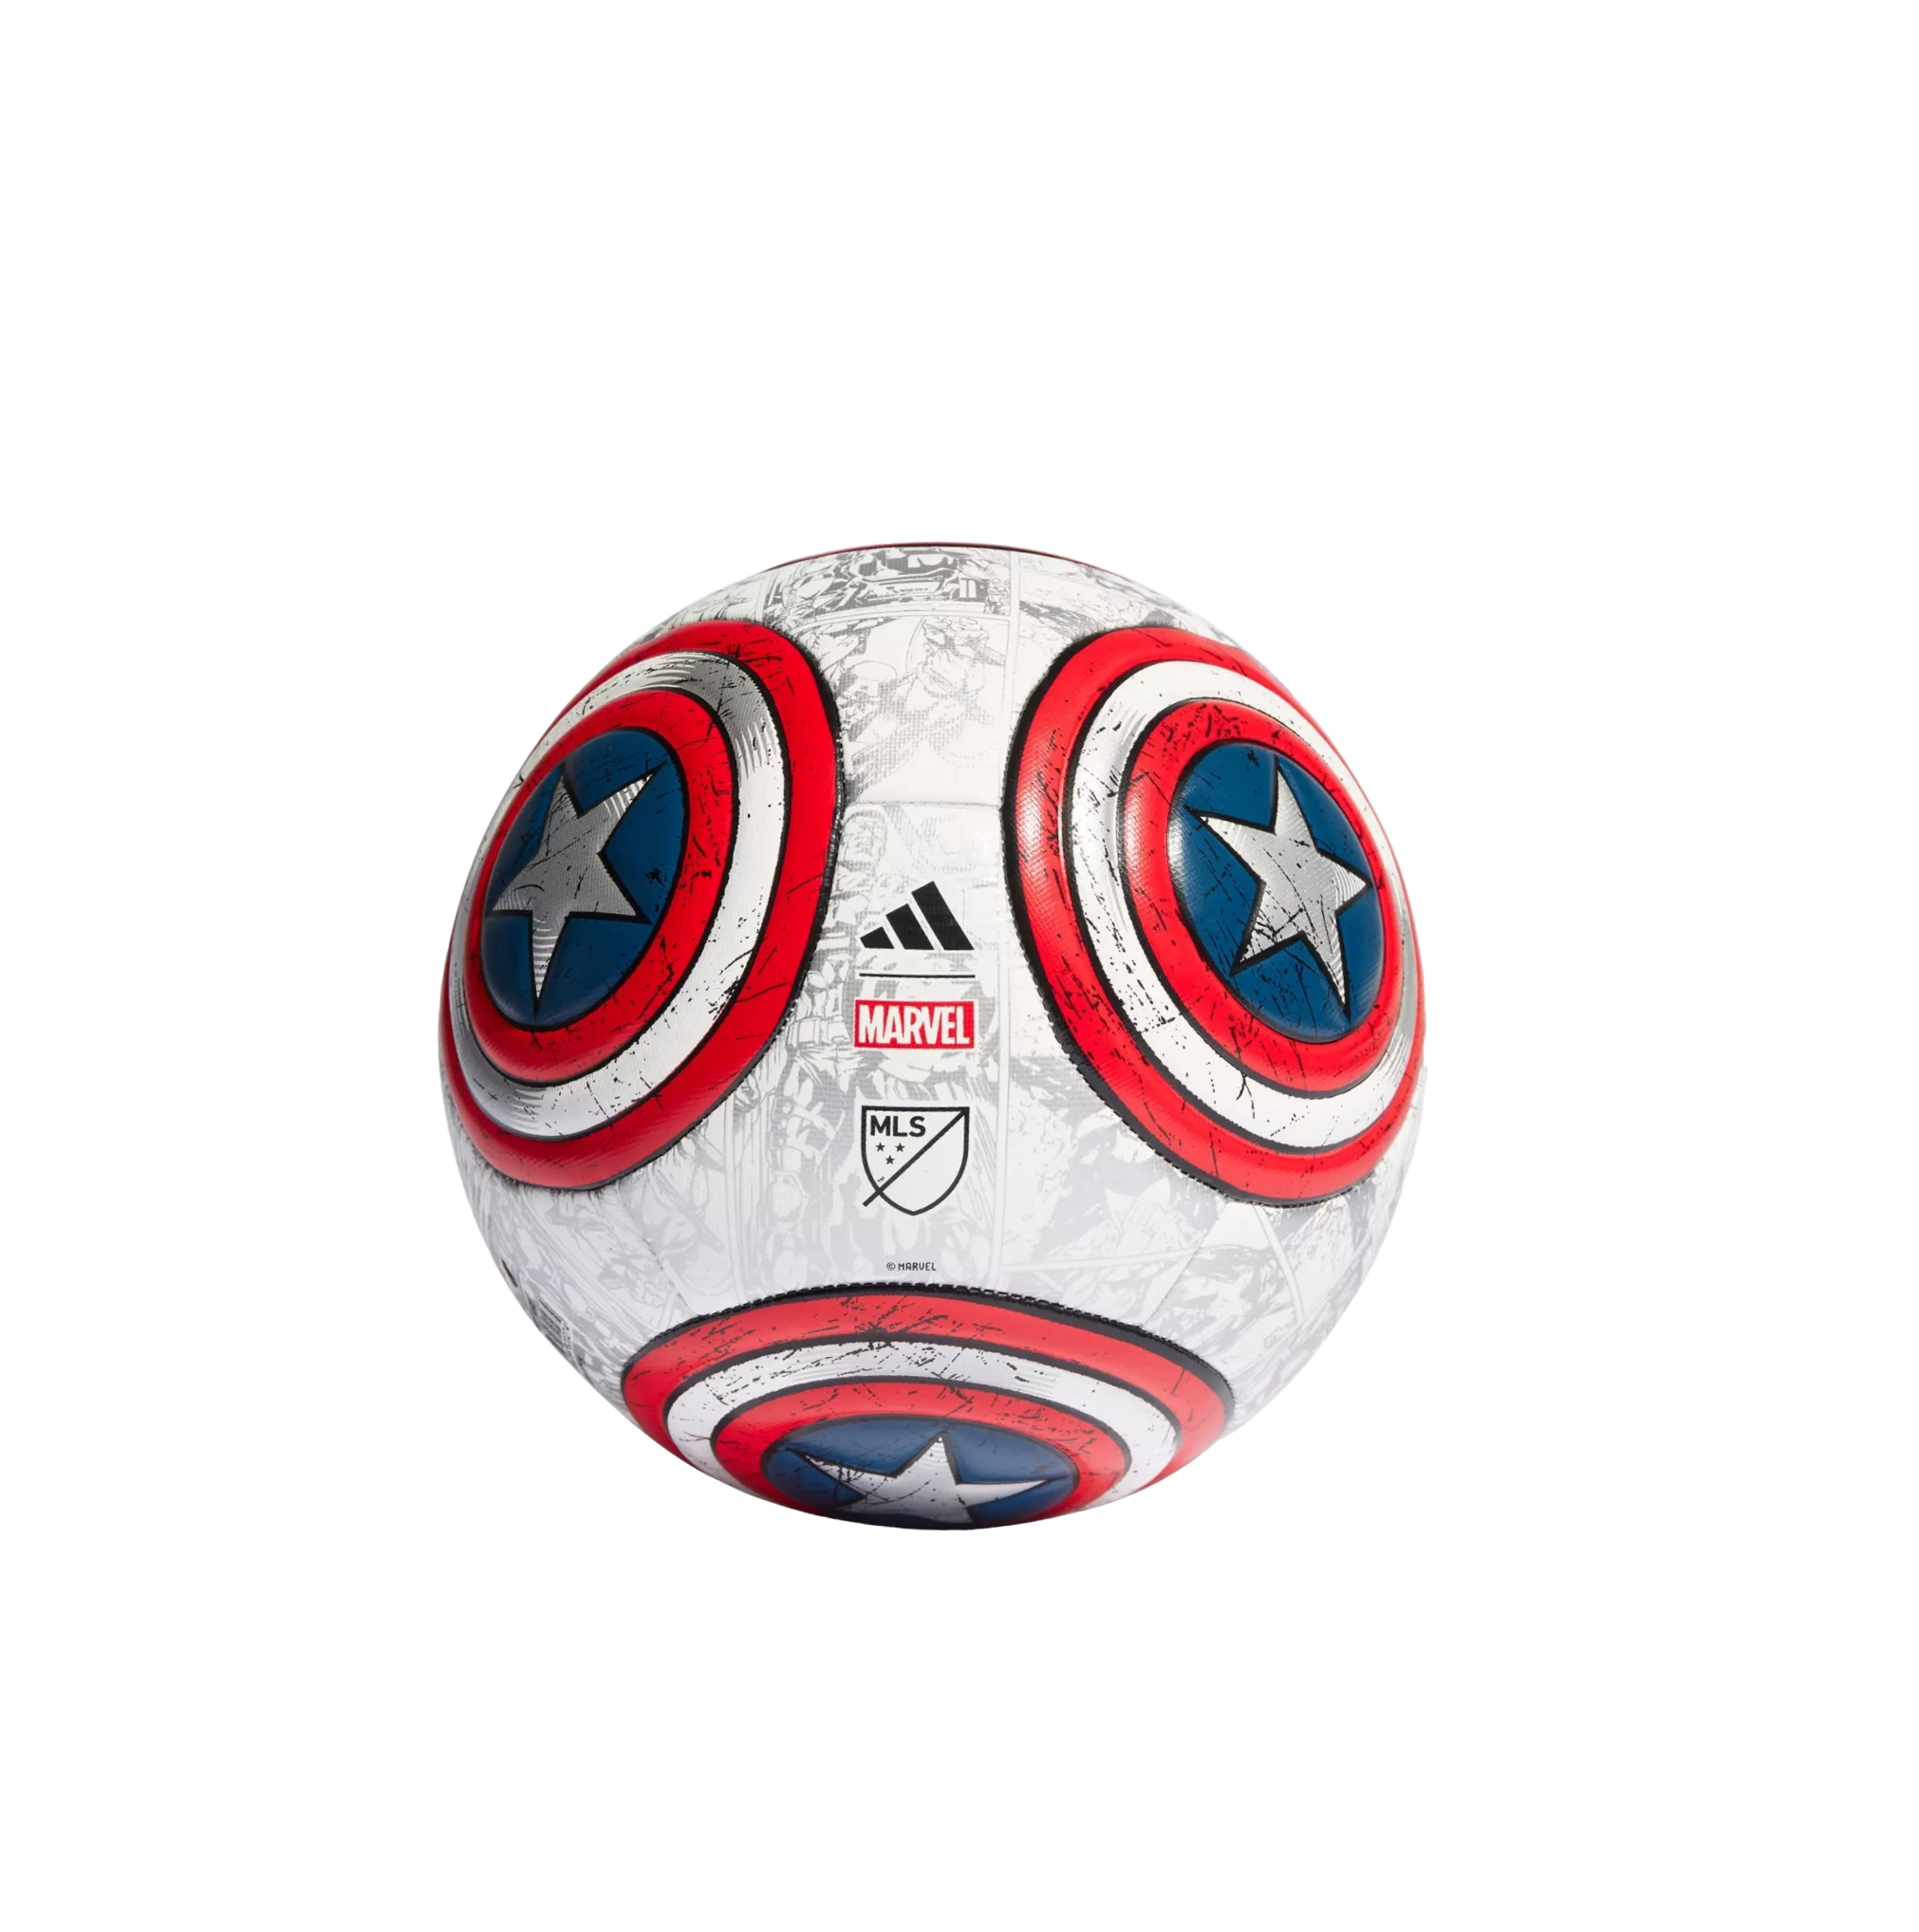  Marvel Avengers Soccer Ball Size 5, Captain America, Iron Man,  Black Panther, Captain Marvel, and Hulk Futbol for Boys and Girls Soccer  Players, Multi, Avengers - Paneled Hero : Sports & Outdoors